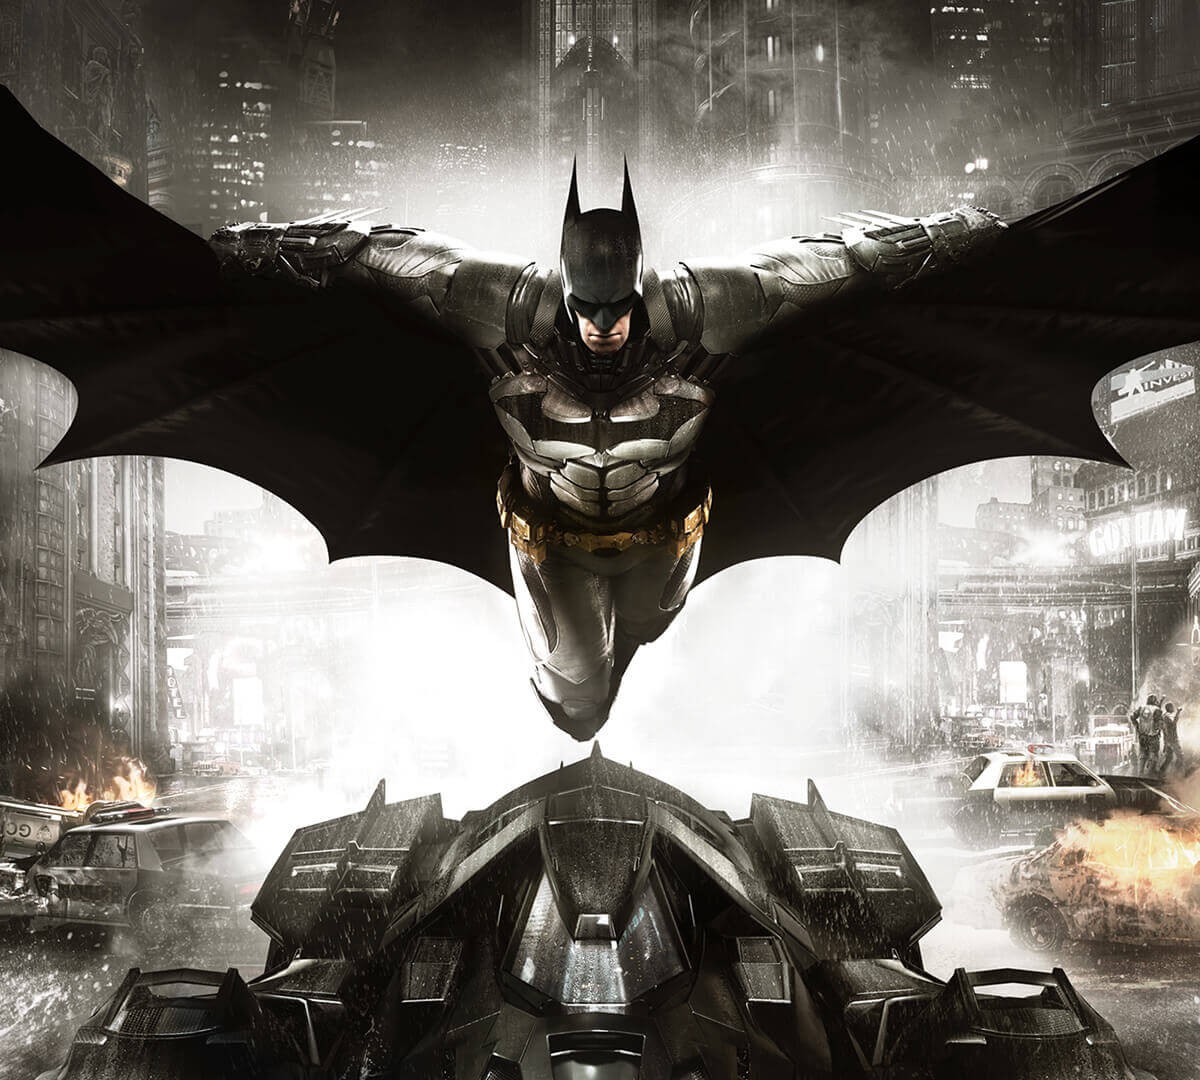 Super coletânea Batman: Arkham Collection disponível no Xbox One